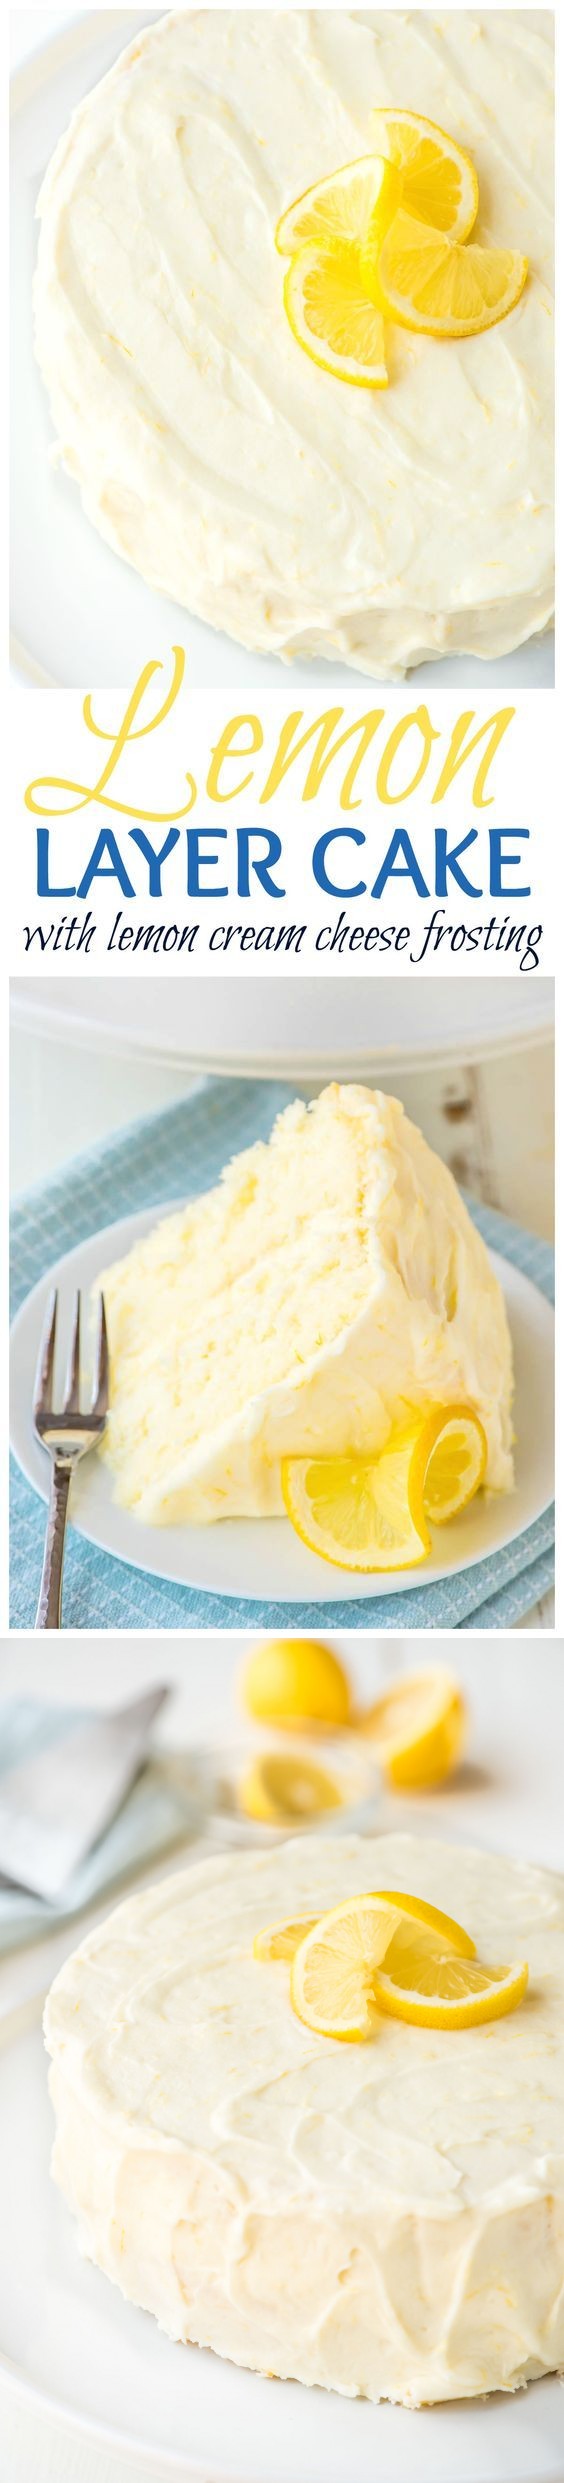 Lemon Cake with Lemon Cream Cheese Frosting